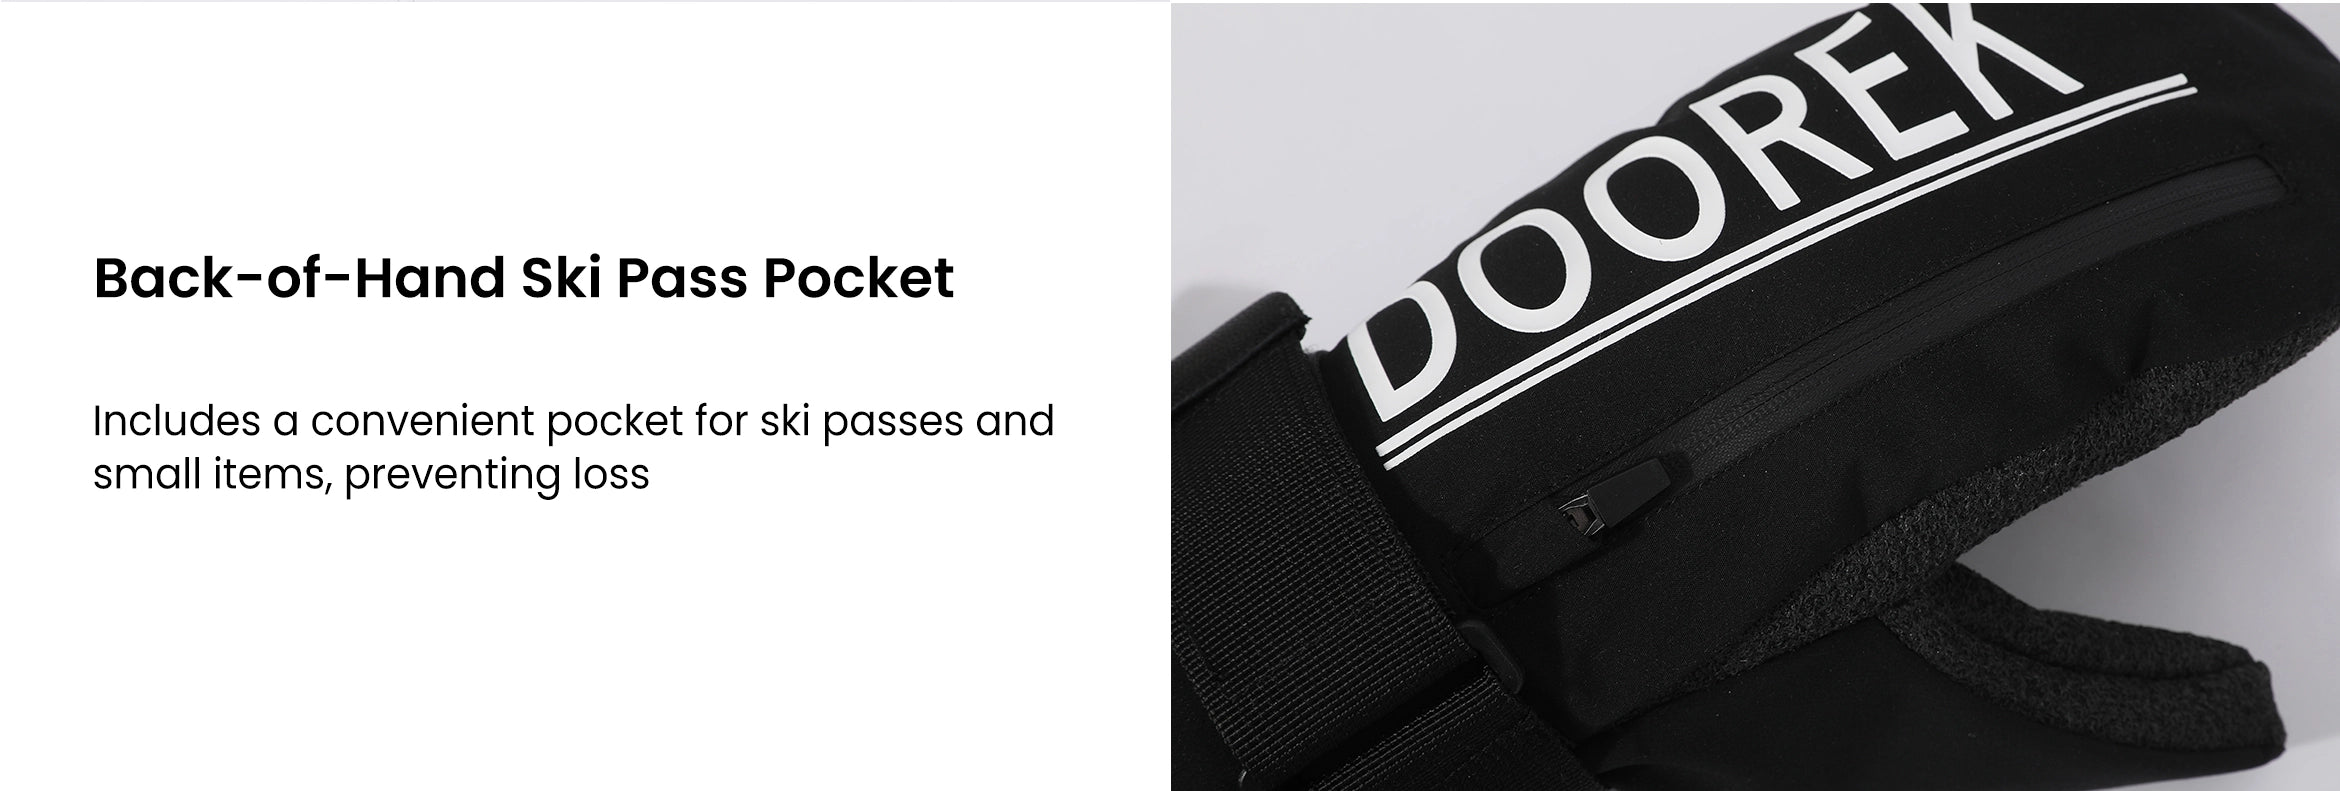 7. Back-of-Hand Ski Pass Pocket